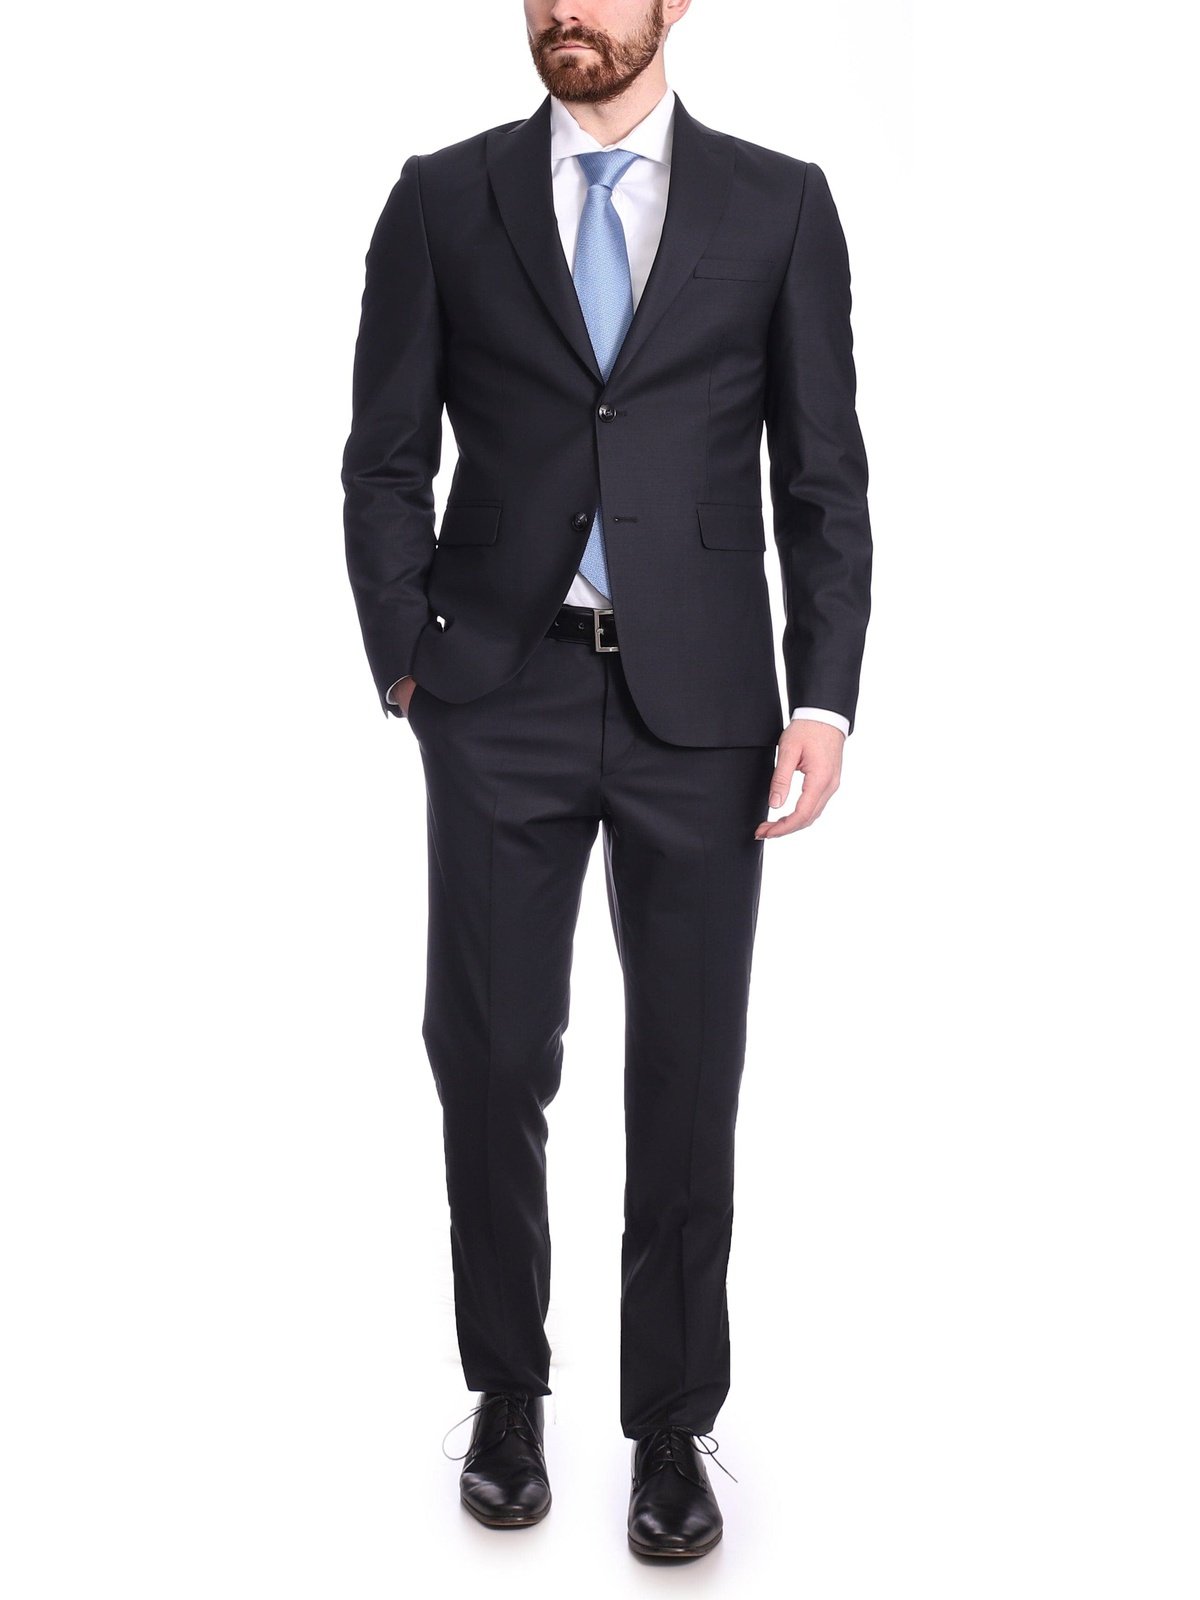 Dark Gray Slim Fit Notch Lapel Wool Suit for Men by